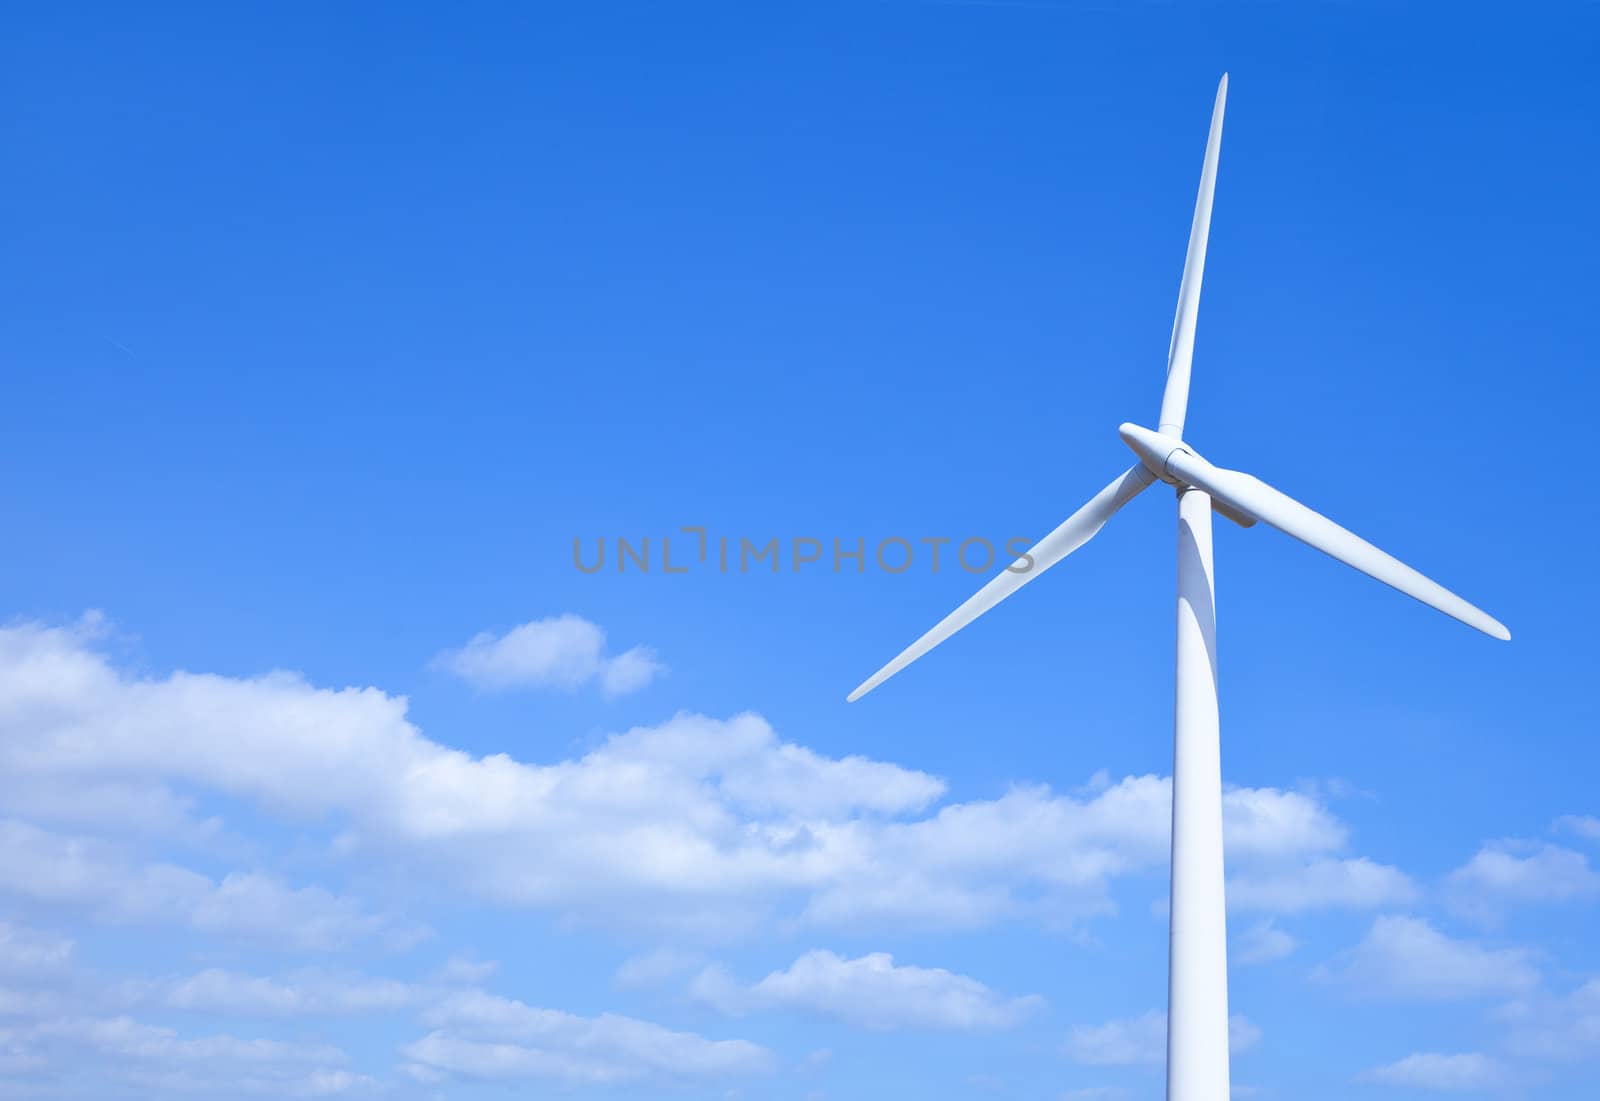 Wind turbine set against a blue sky
